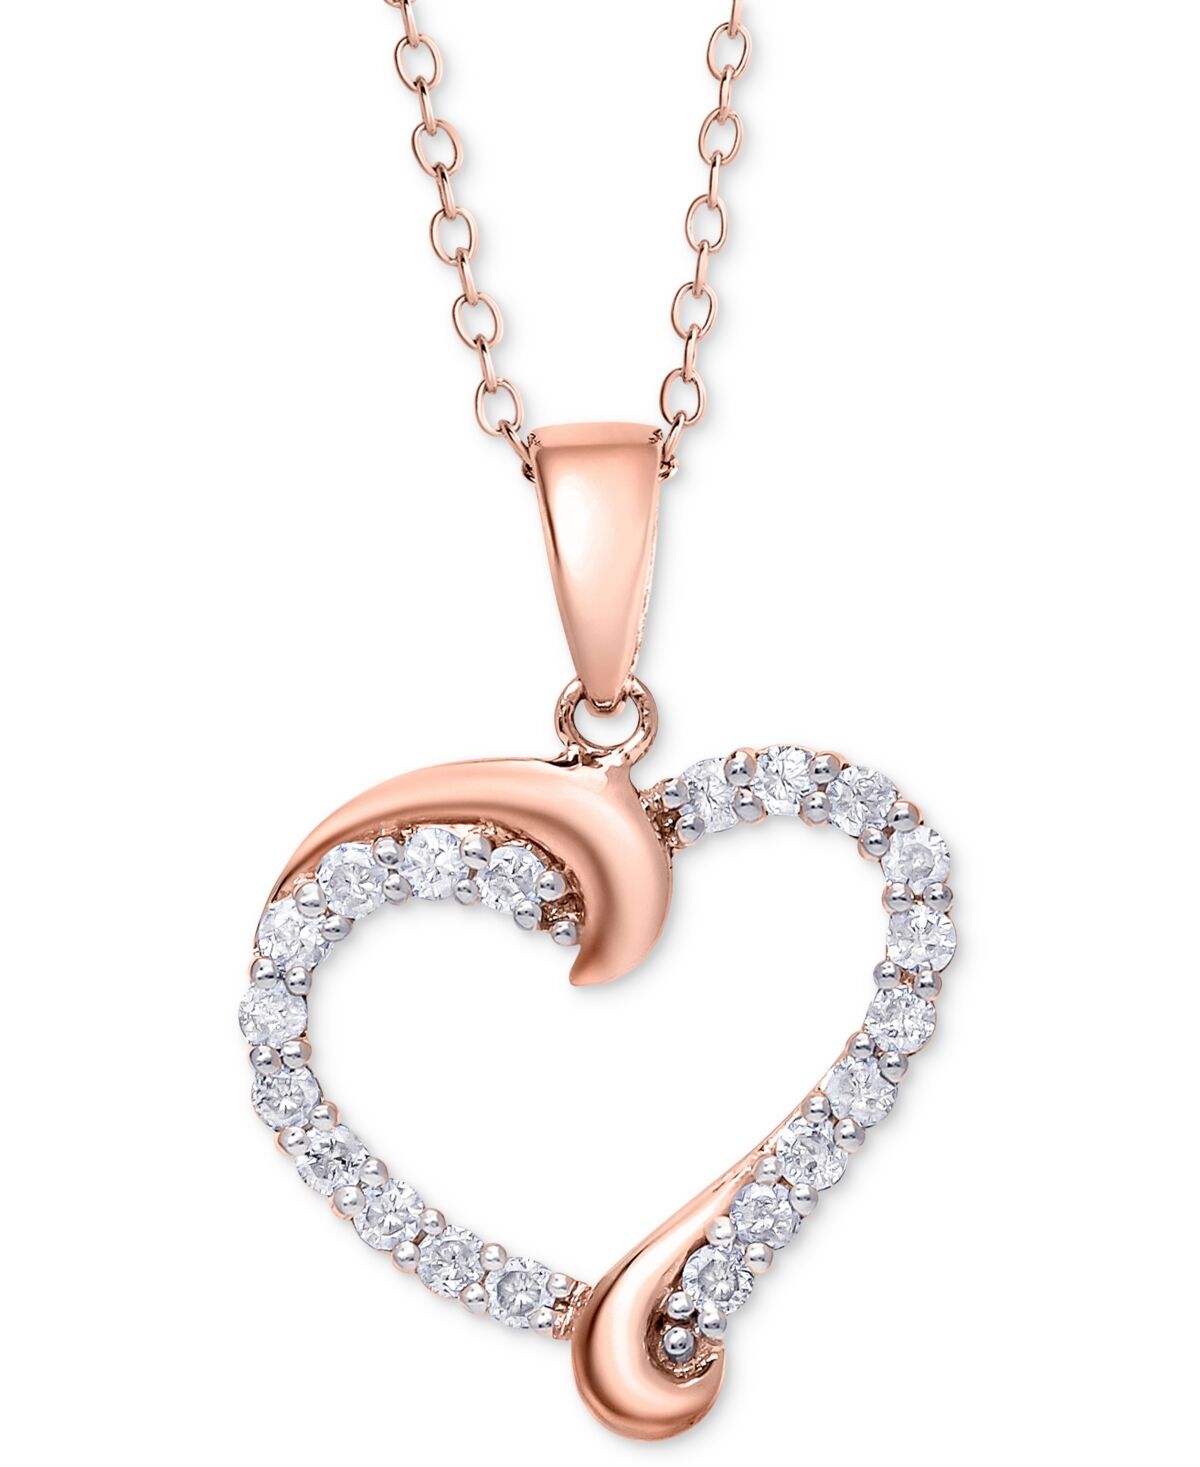 Macy's Diamond Swirl Heart Pendant Necklace (1/2 ct. t.w.) in Sterling Silver, 14k Gold-Plated Sterling Silver, or 14k Rose Gold-Plated Sterling Silver - Pin